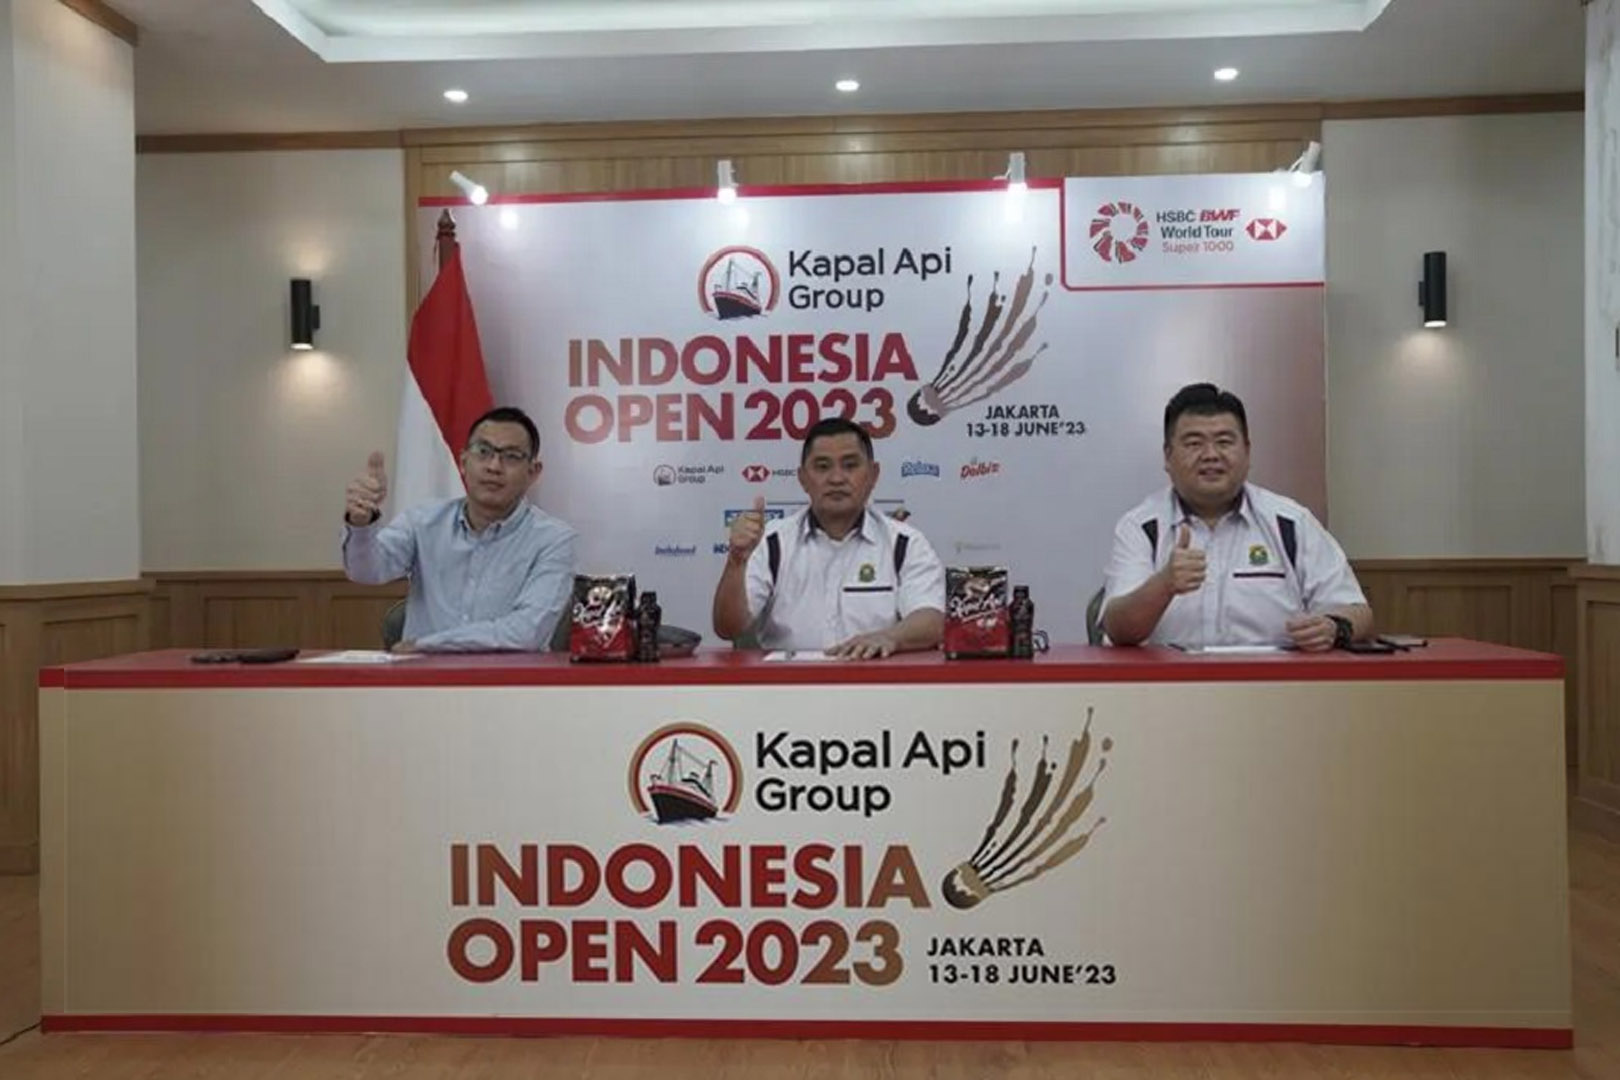 Tiket Indonesia Open 2023 Dibuka, Harga Termurah Rp 125 Ribu - iMSPORT.TV